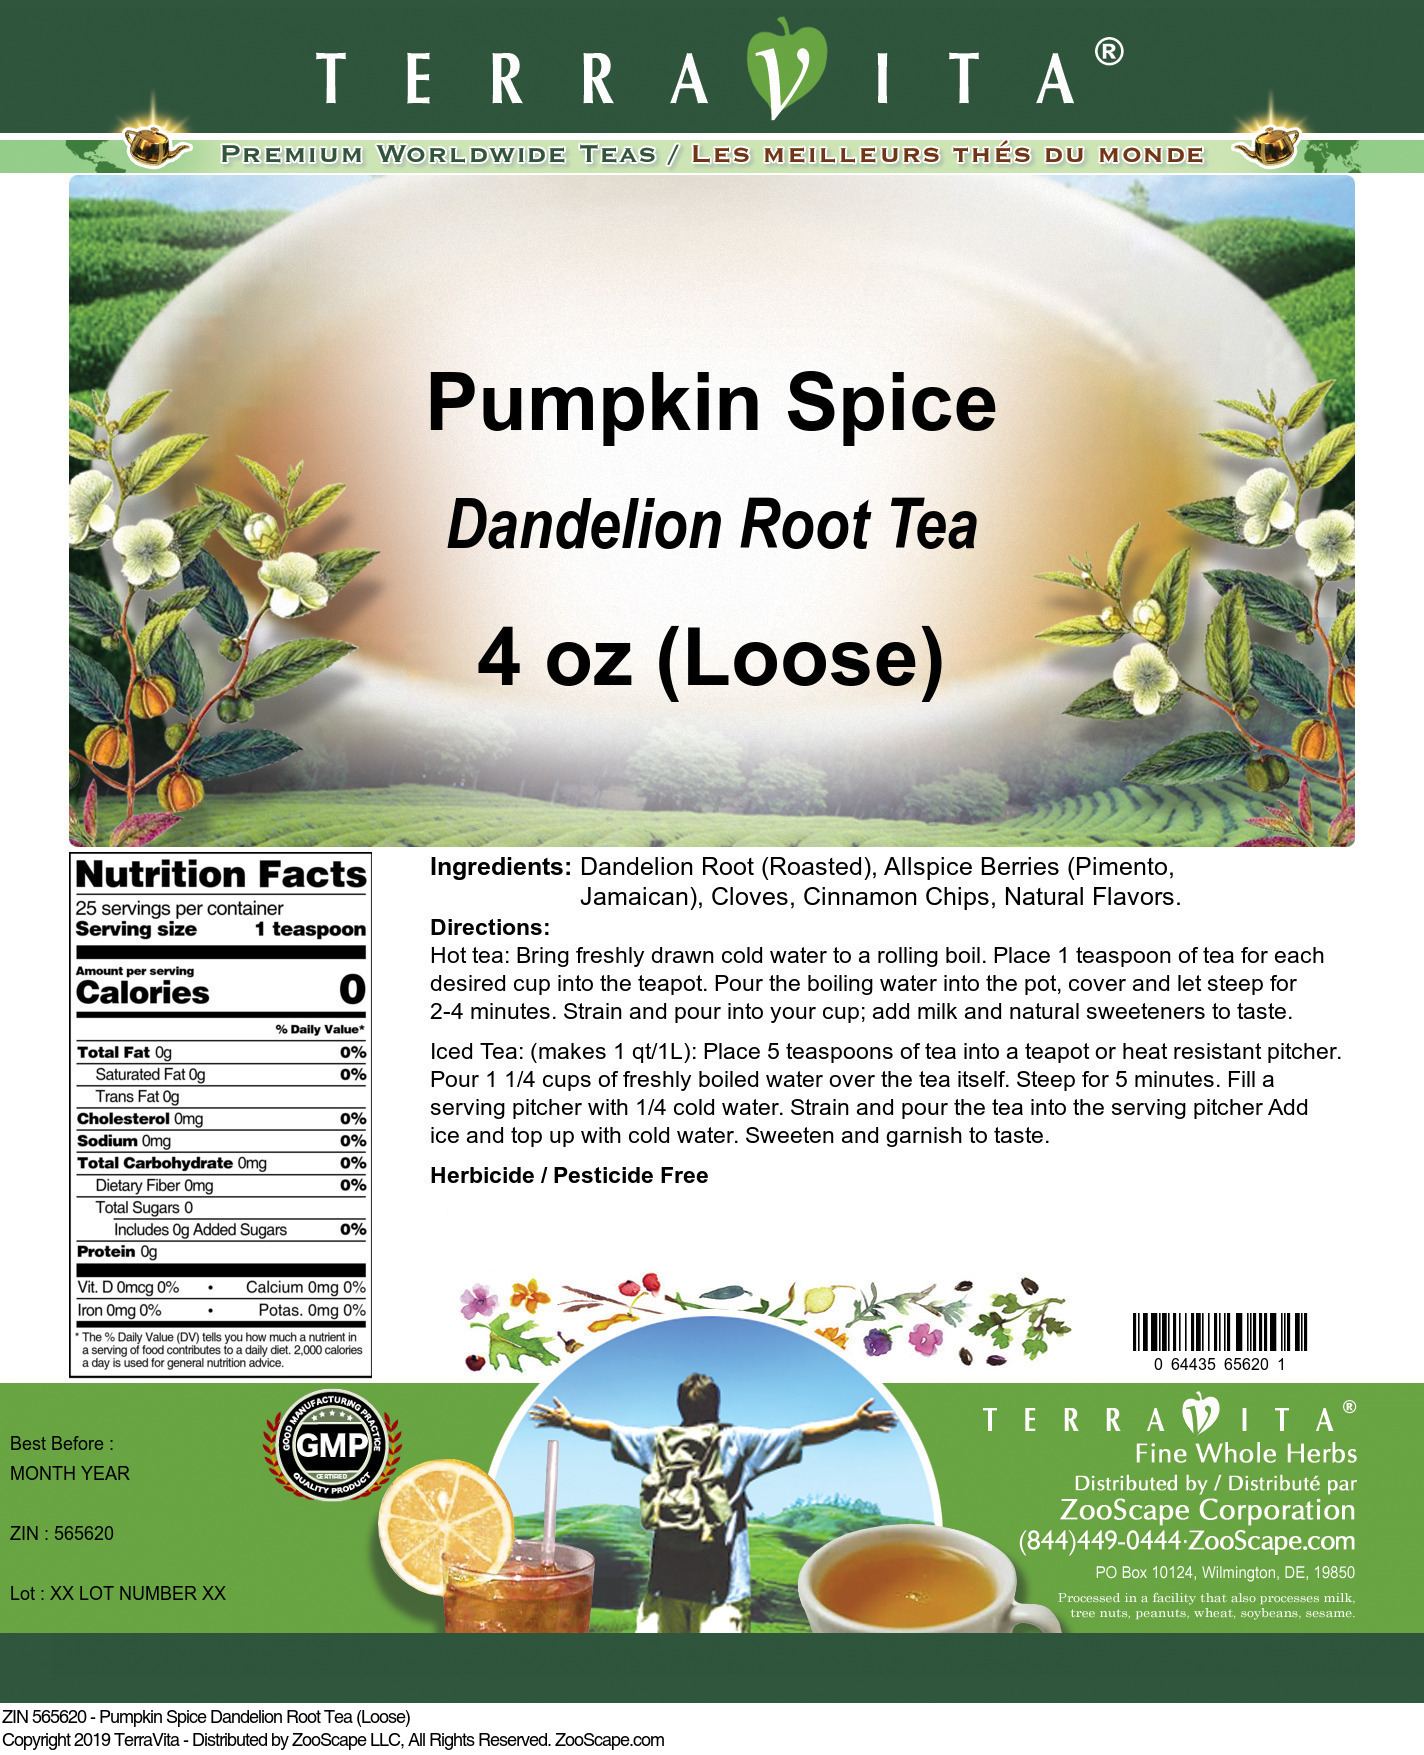 Pumpkin Spice Dandelion Root Tea (Loose) - Label